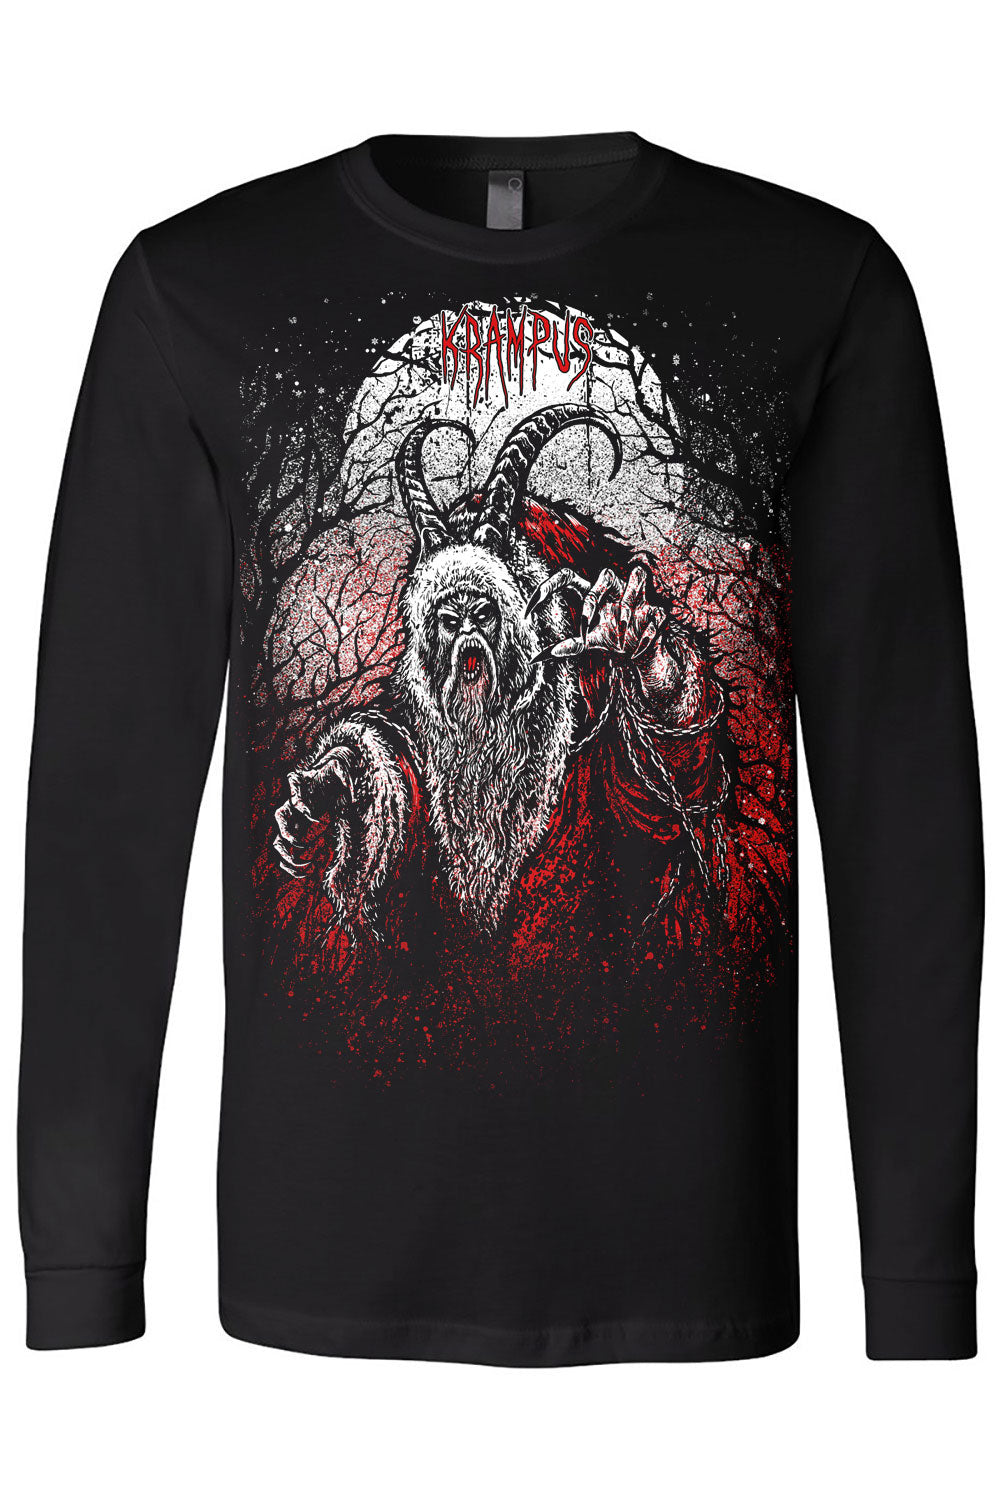 gothic scary horror krampus shirt